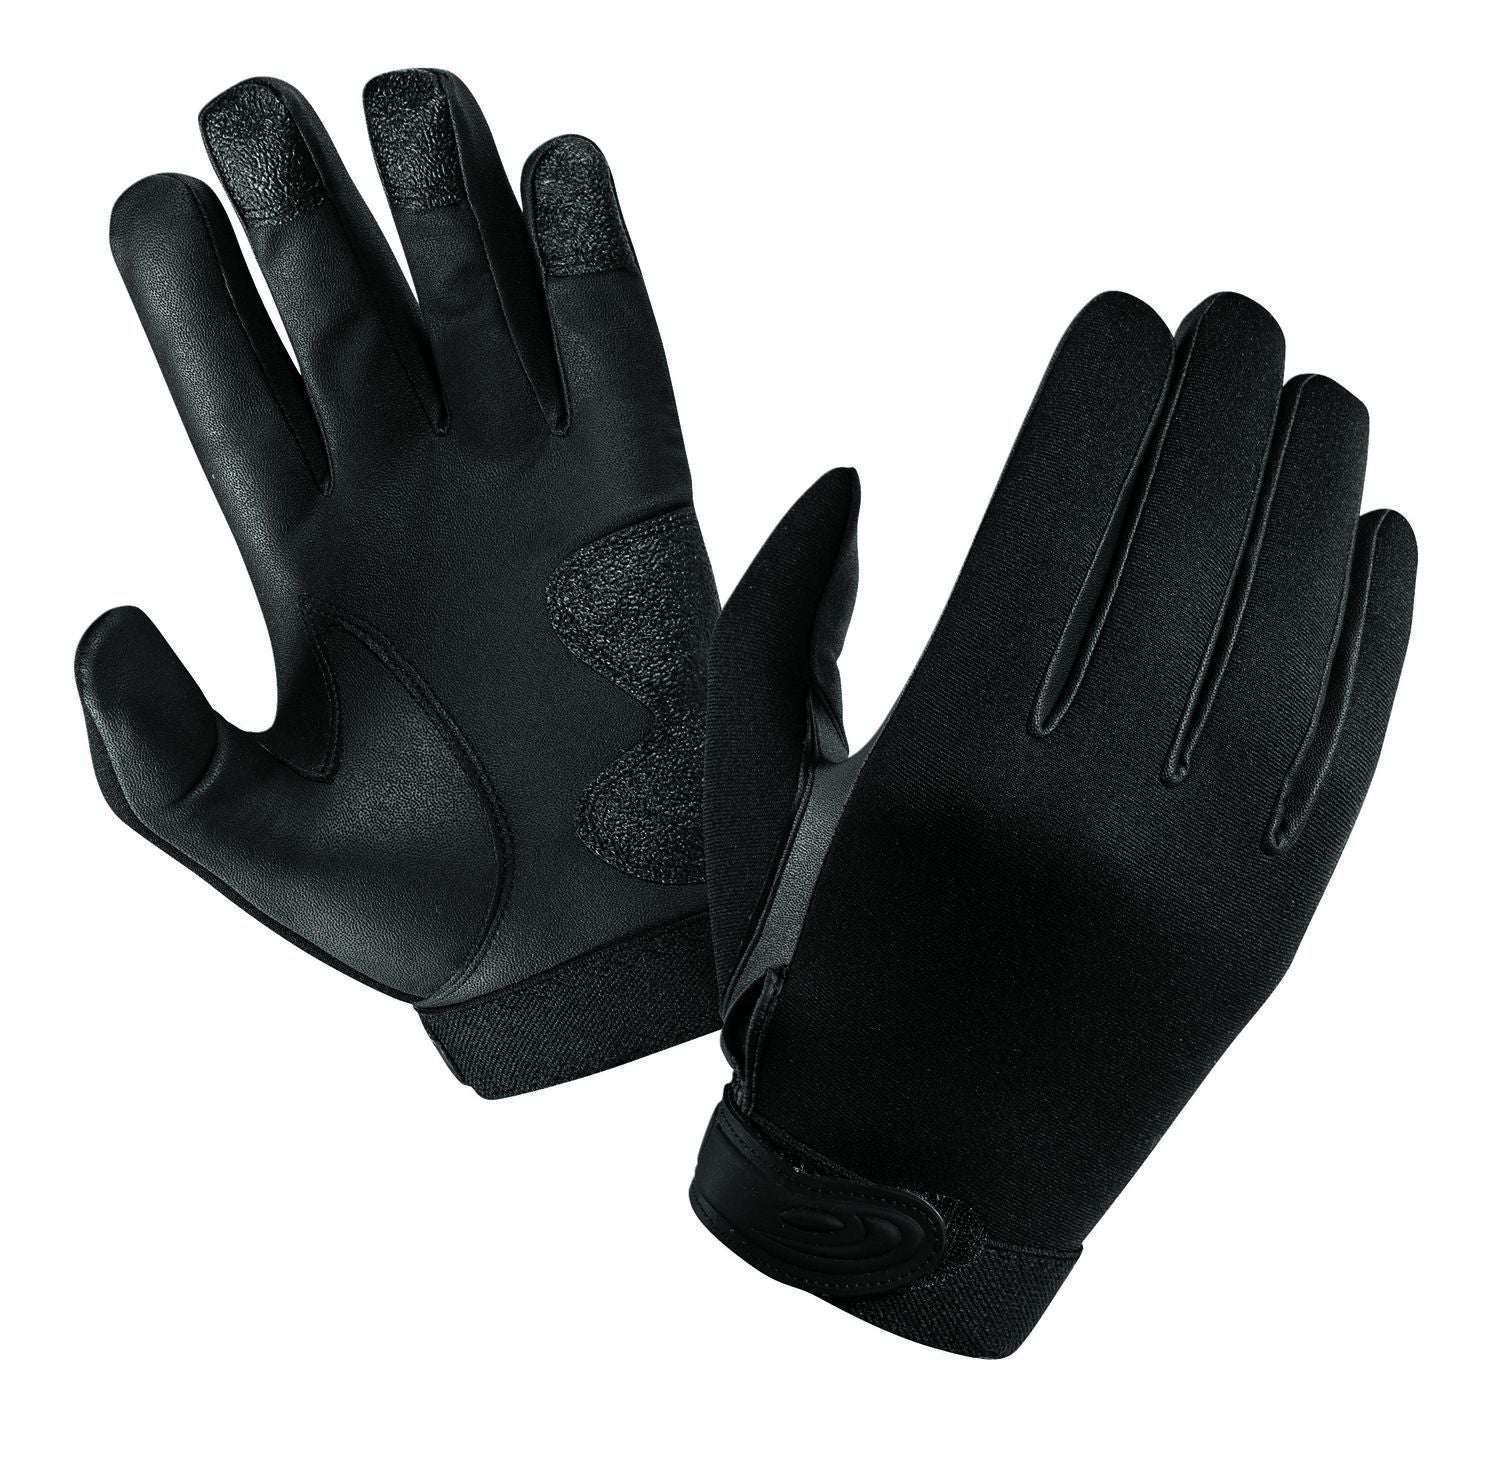 Hatch Specialist Neoprene Gloves Police Security Law Enforcement Glove Tactical Gear